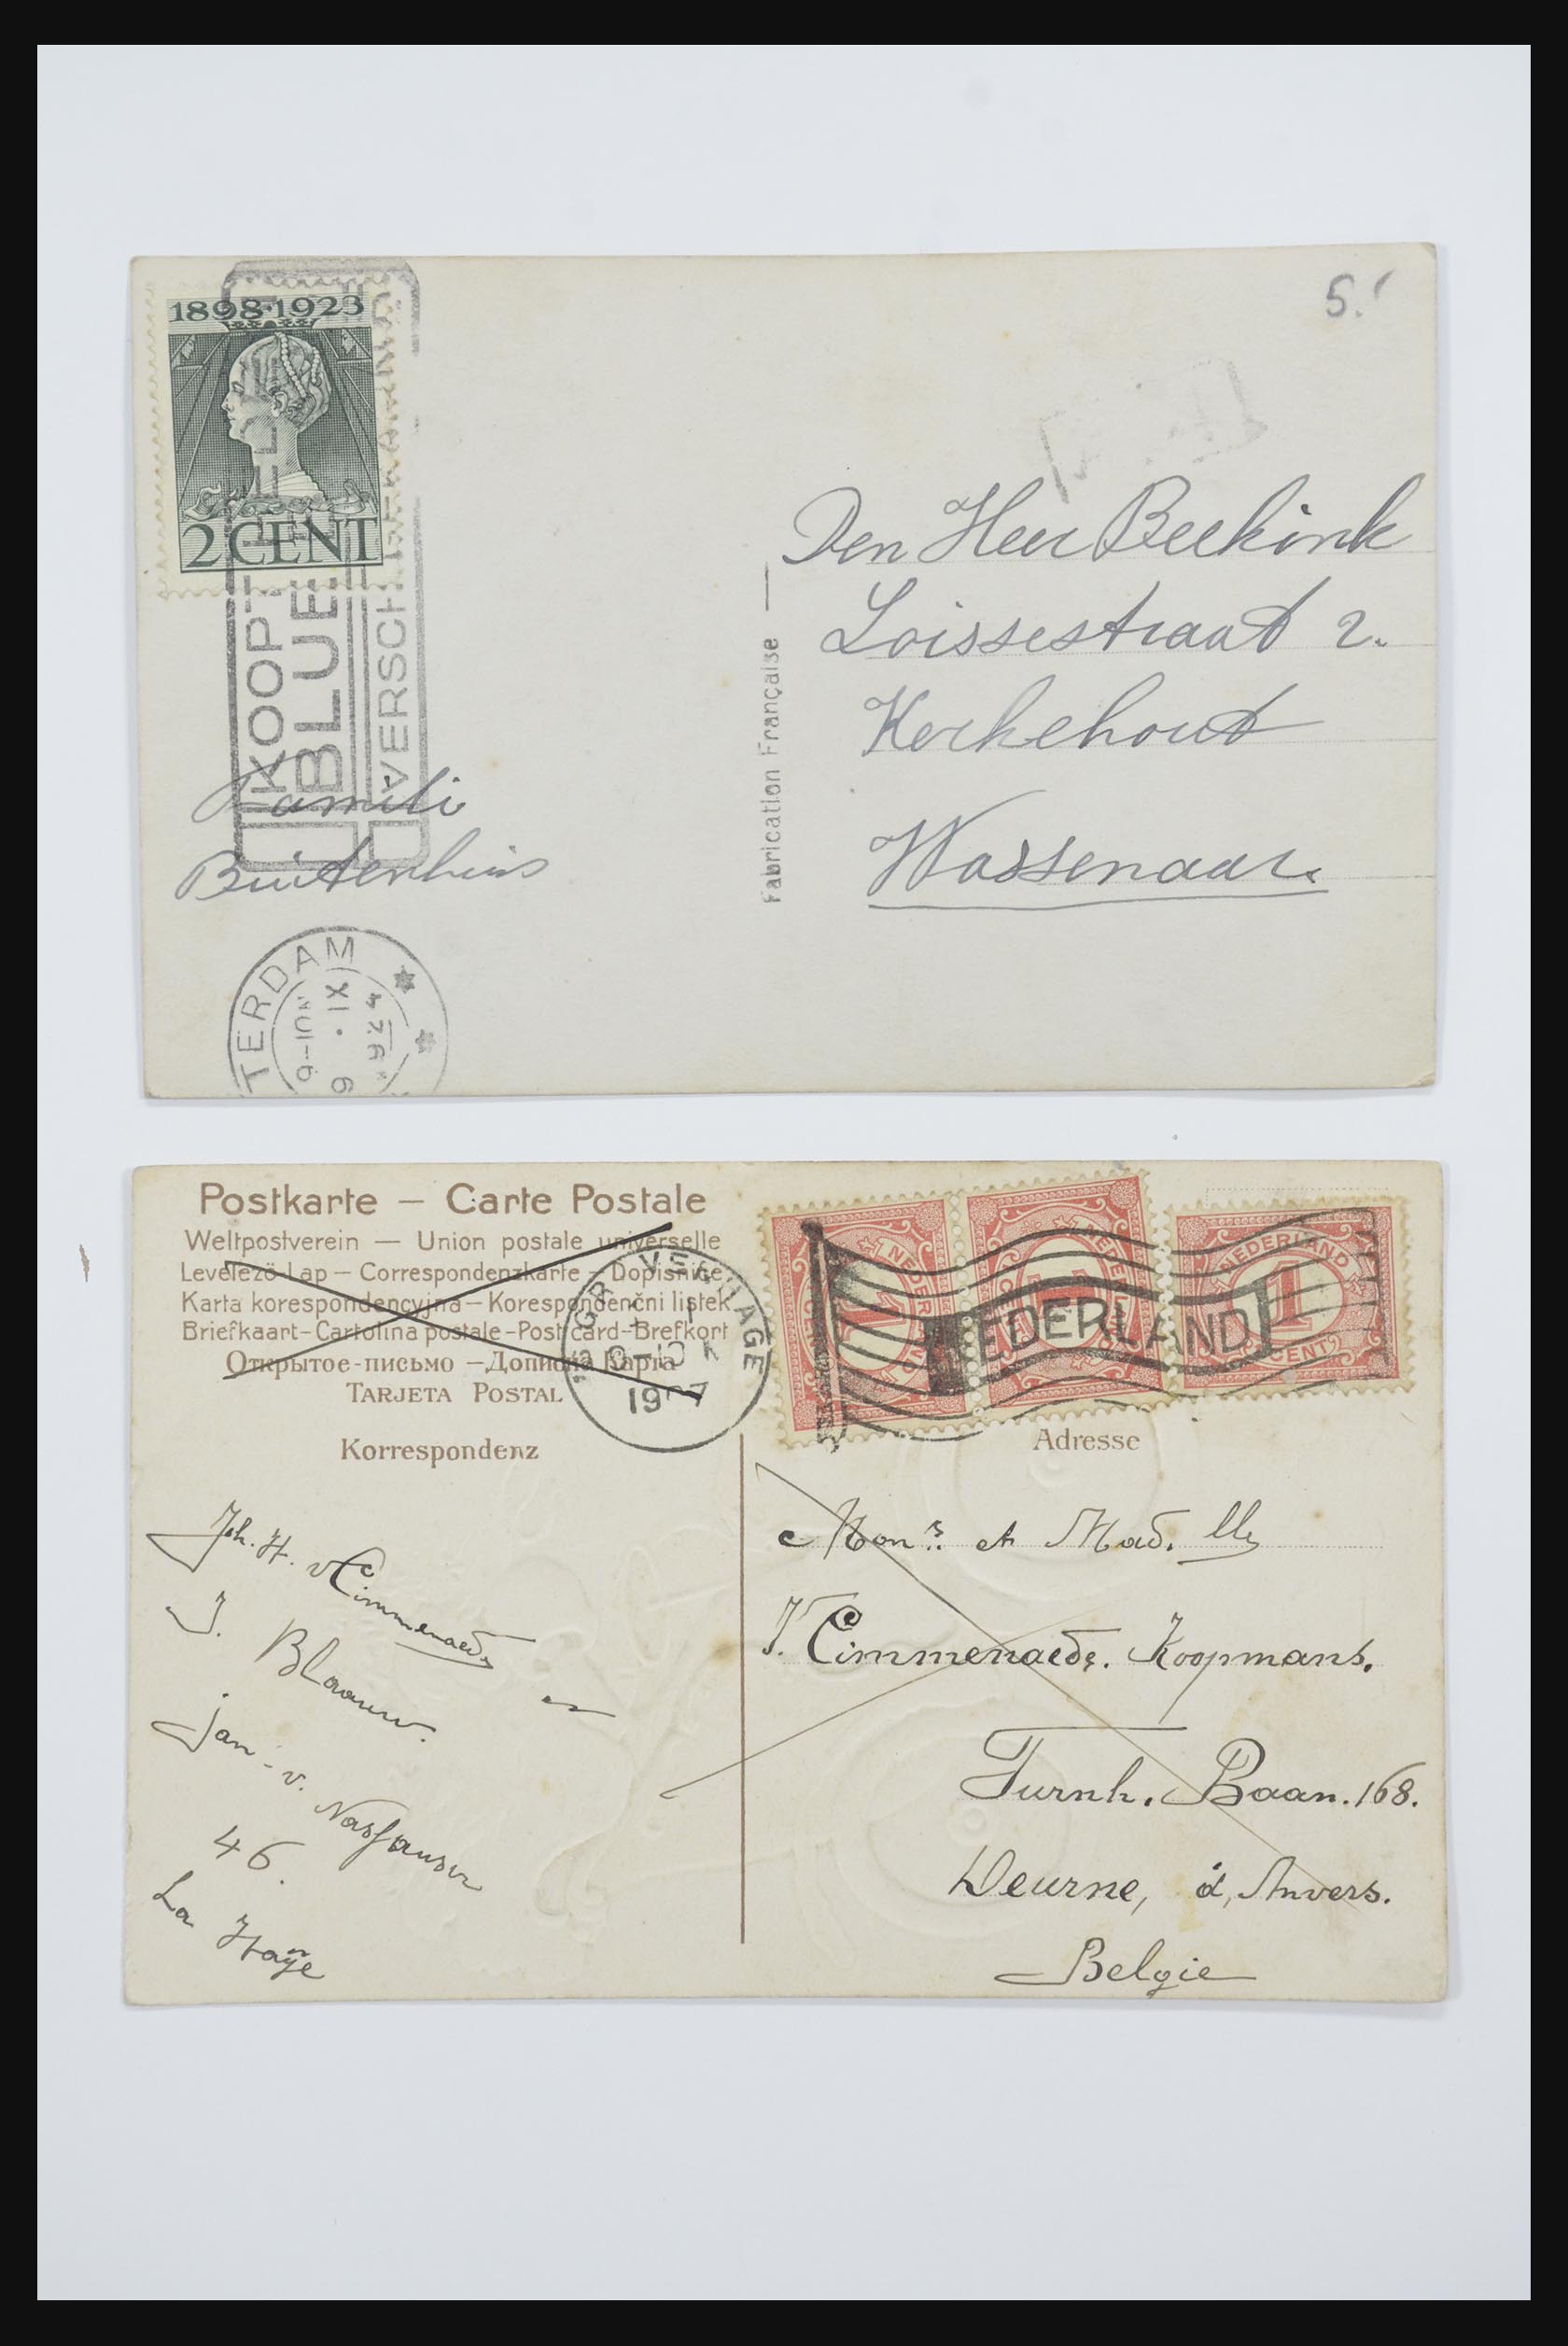 31668 006 - 31668 Netherlands picture postcards 1905-1935.